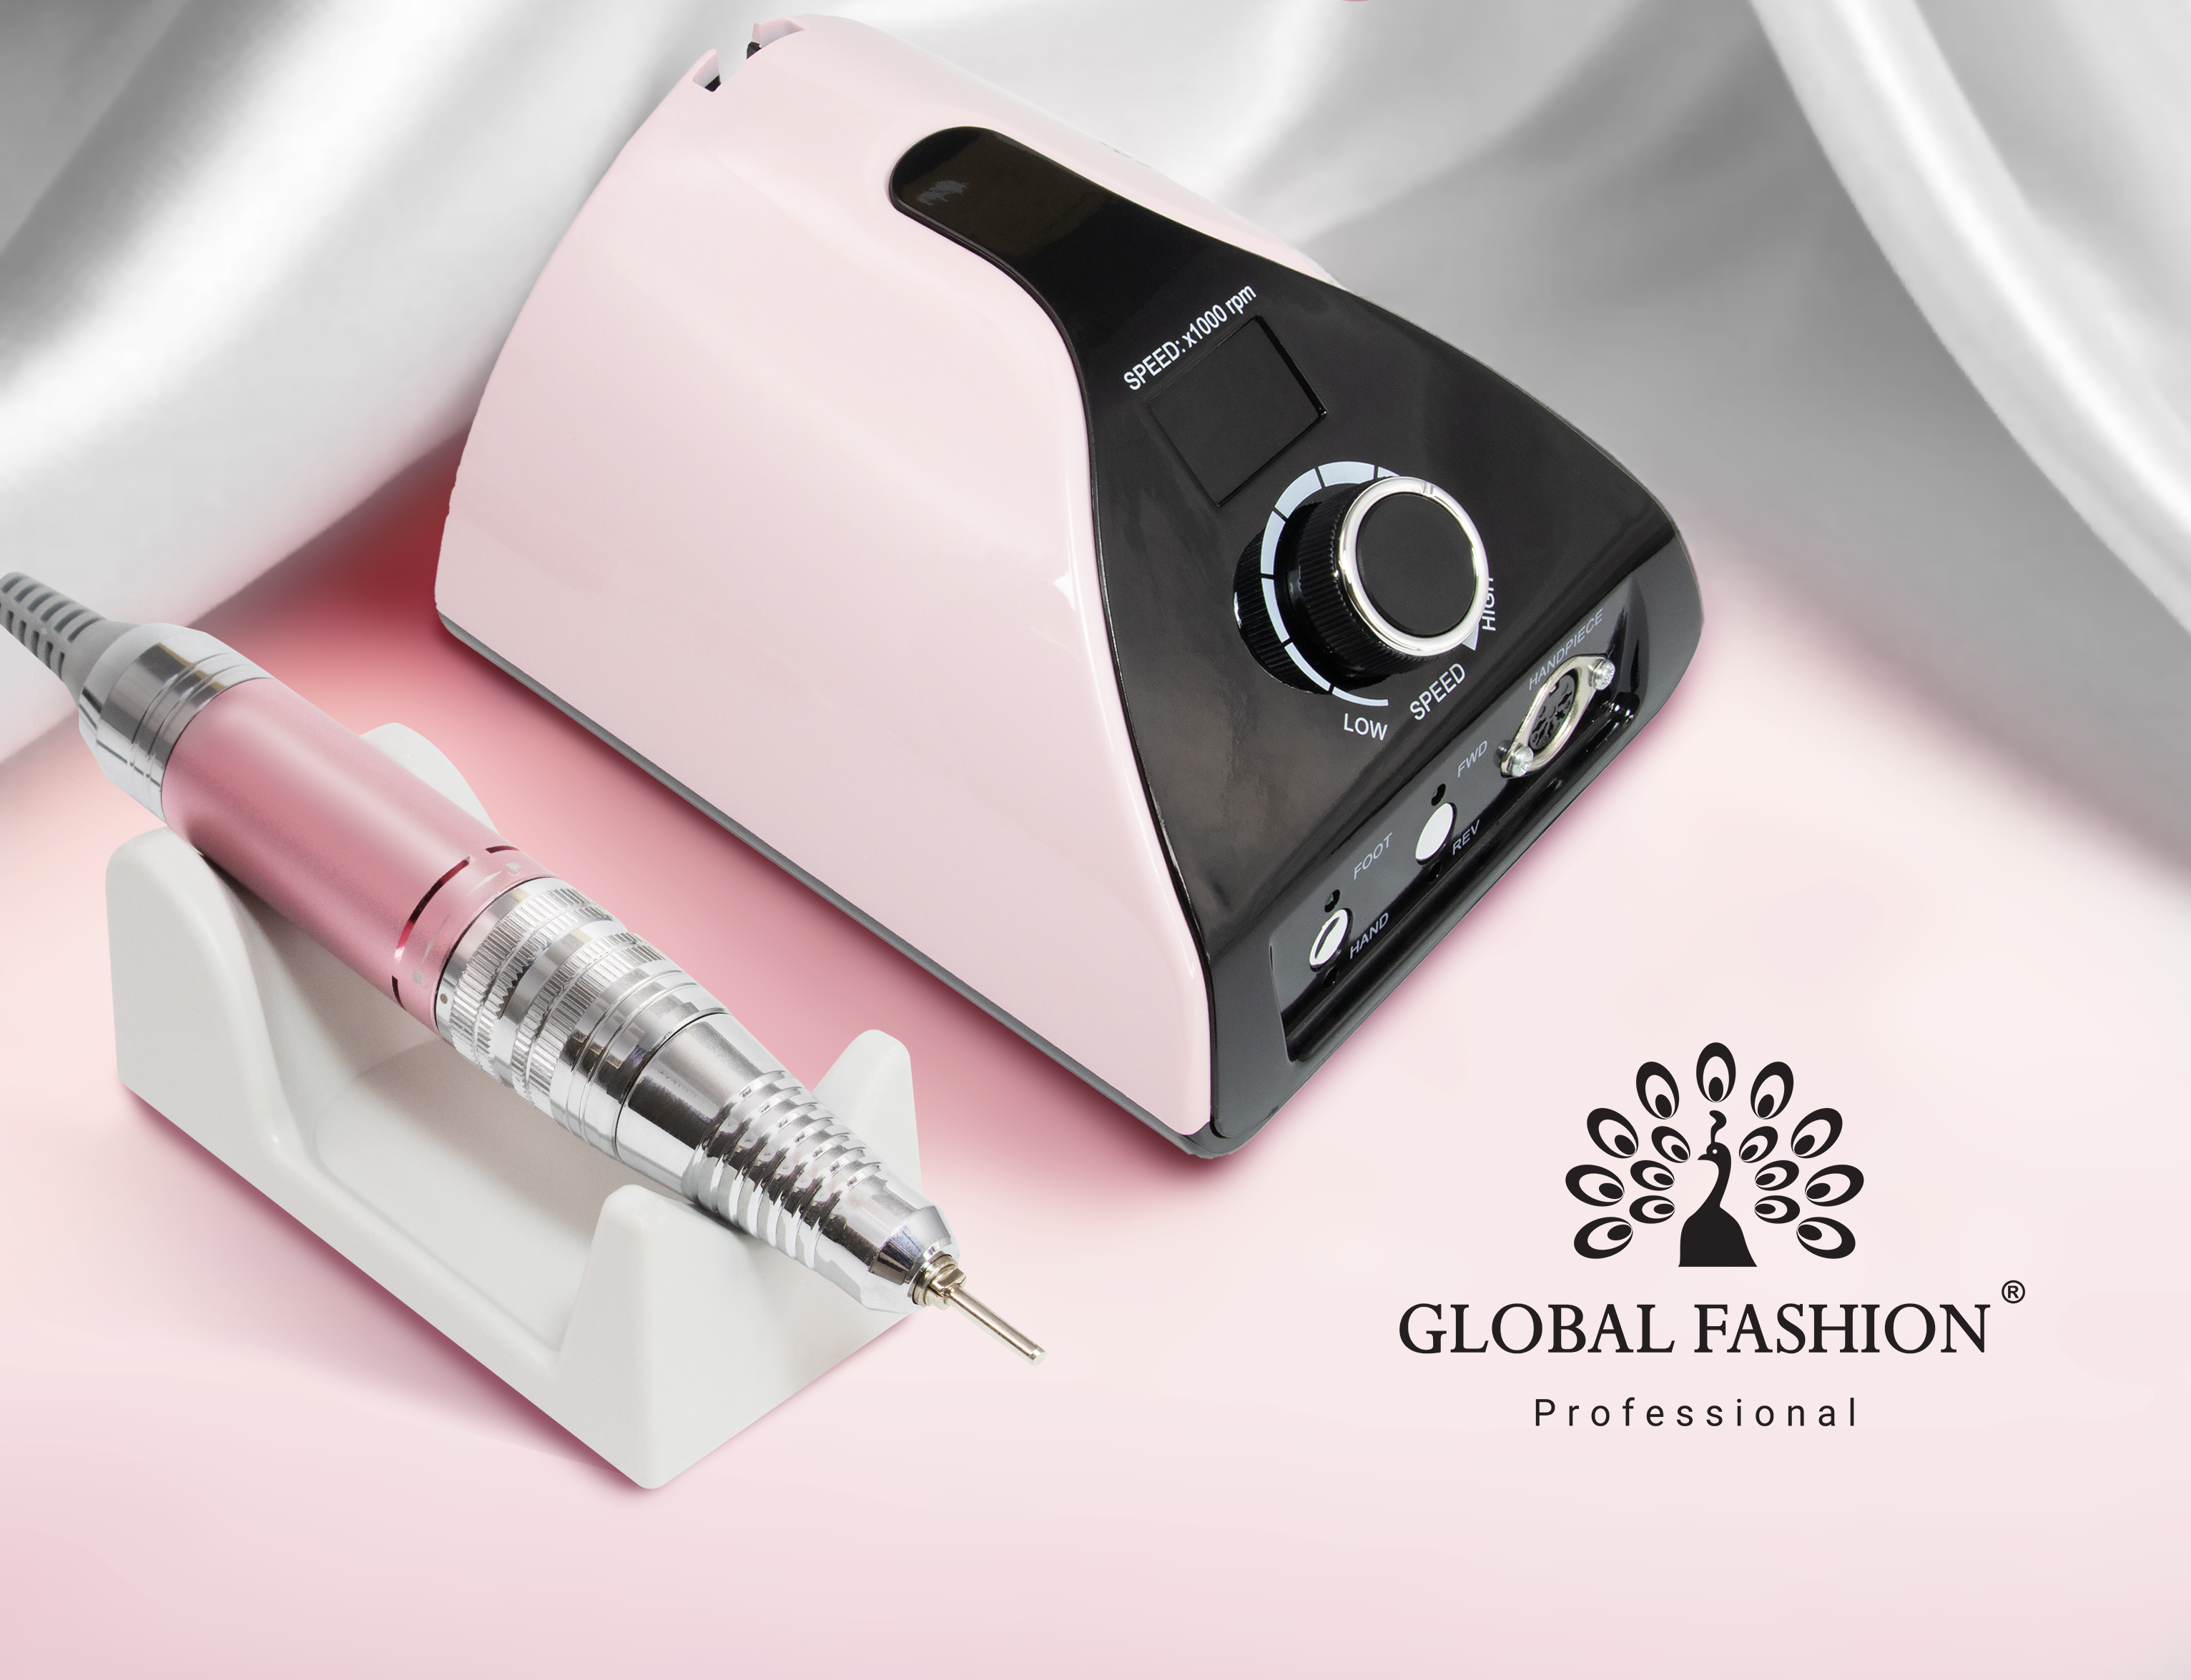 Аппарат для маникюра и педикюра ZS-711 65W 35000 об/мин: топовая модель от Global Fashion